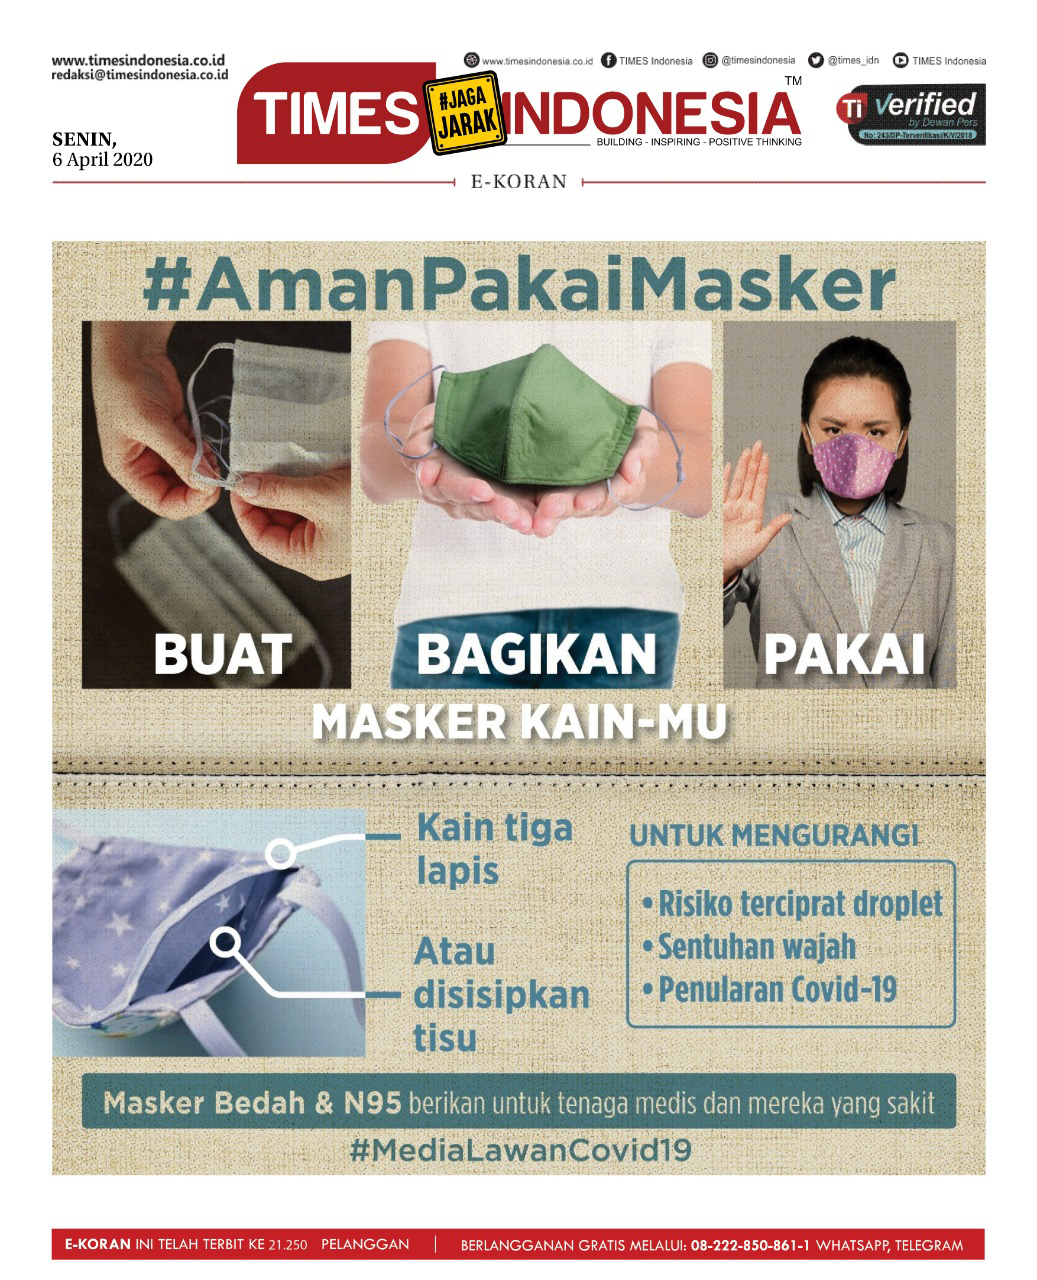 TIMES-Indonesia-Masker-Ekoran.png